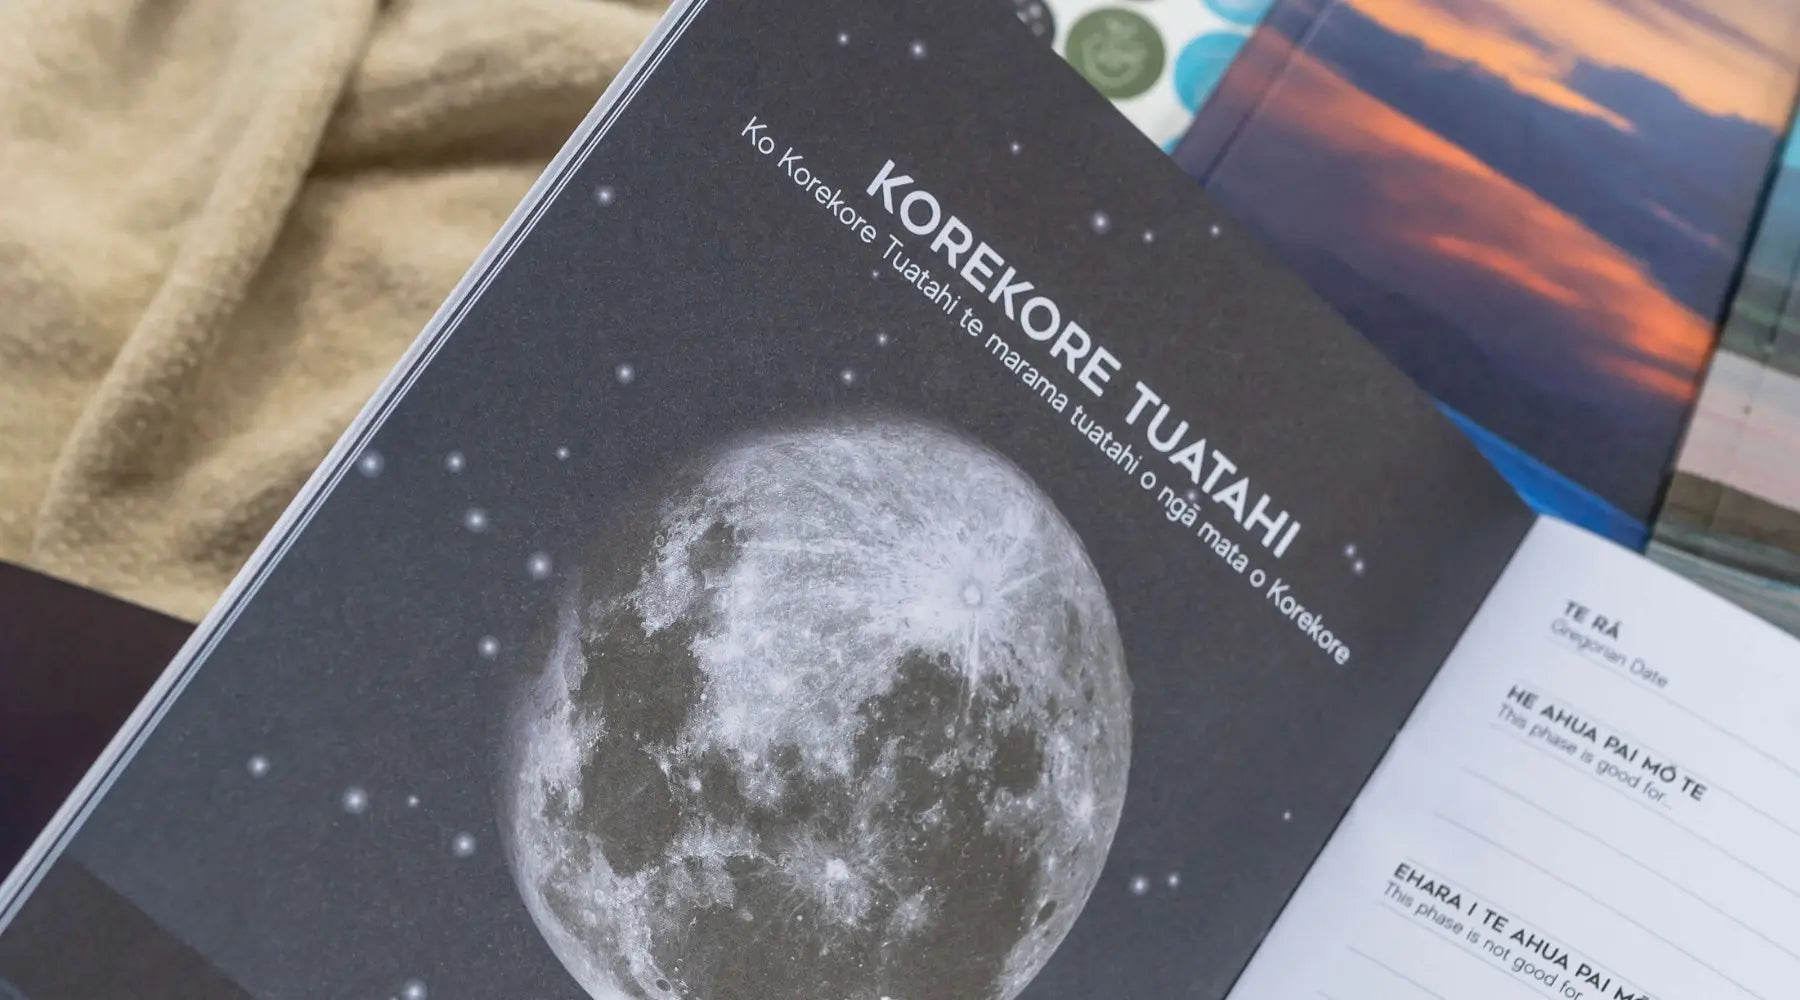 Korekore-Nights-of-the-maramataka-ahead Tuhi Stationery Ltd